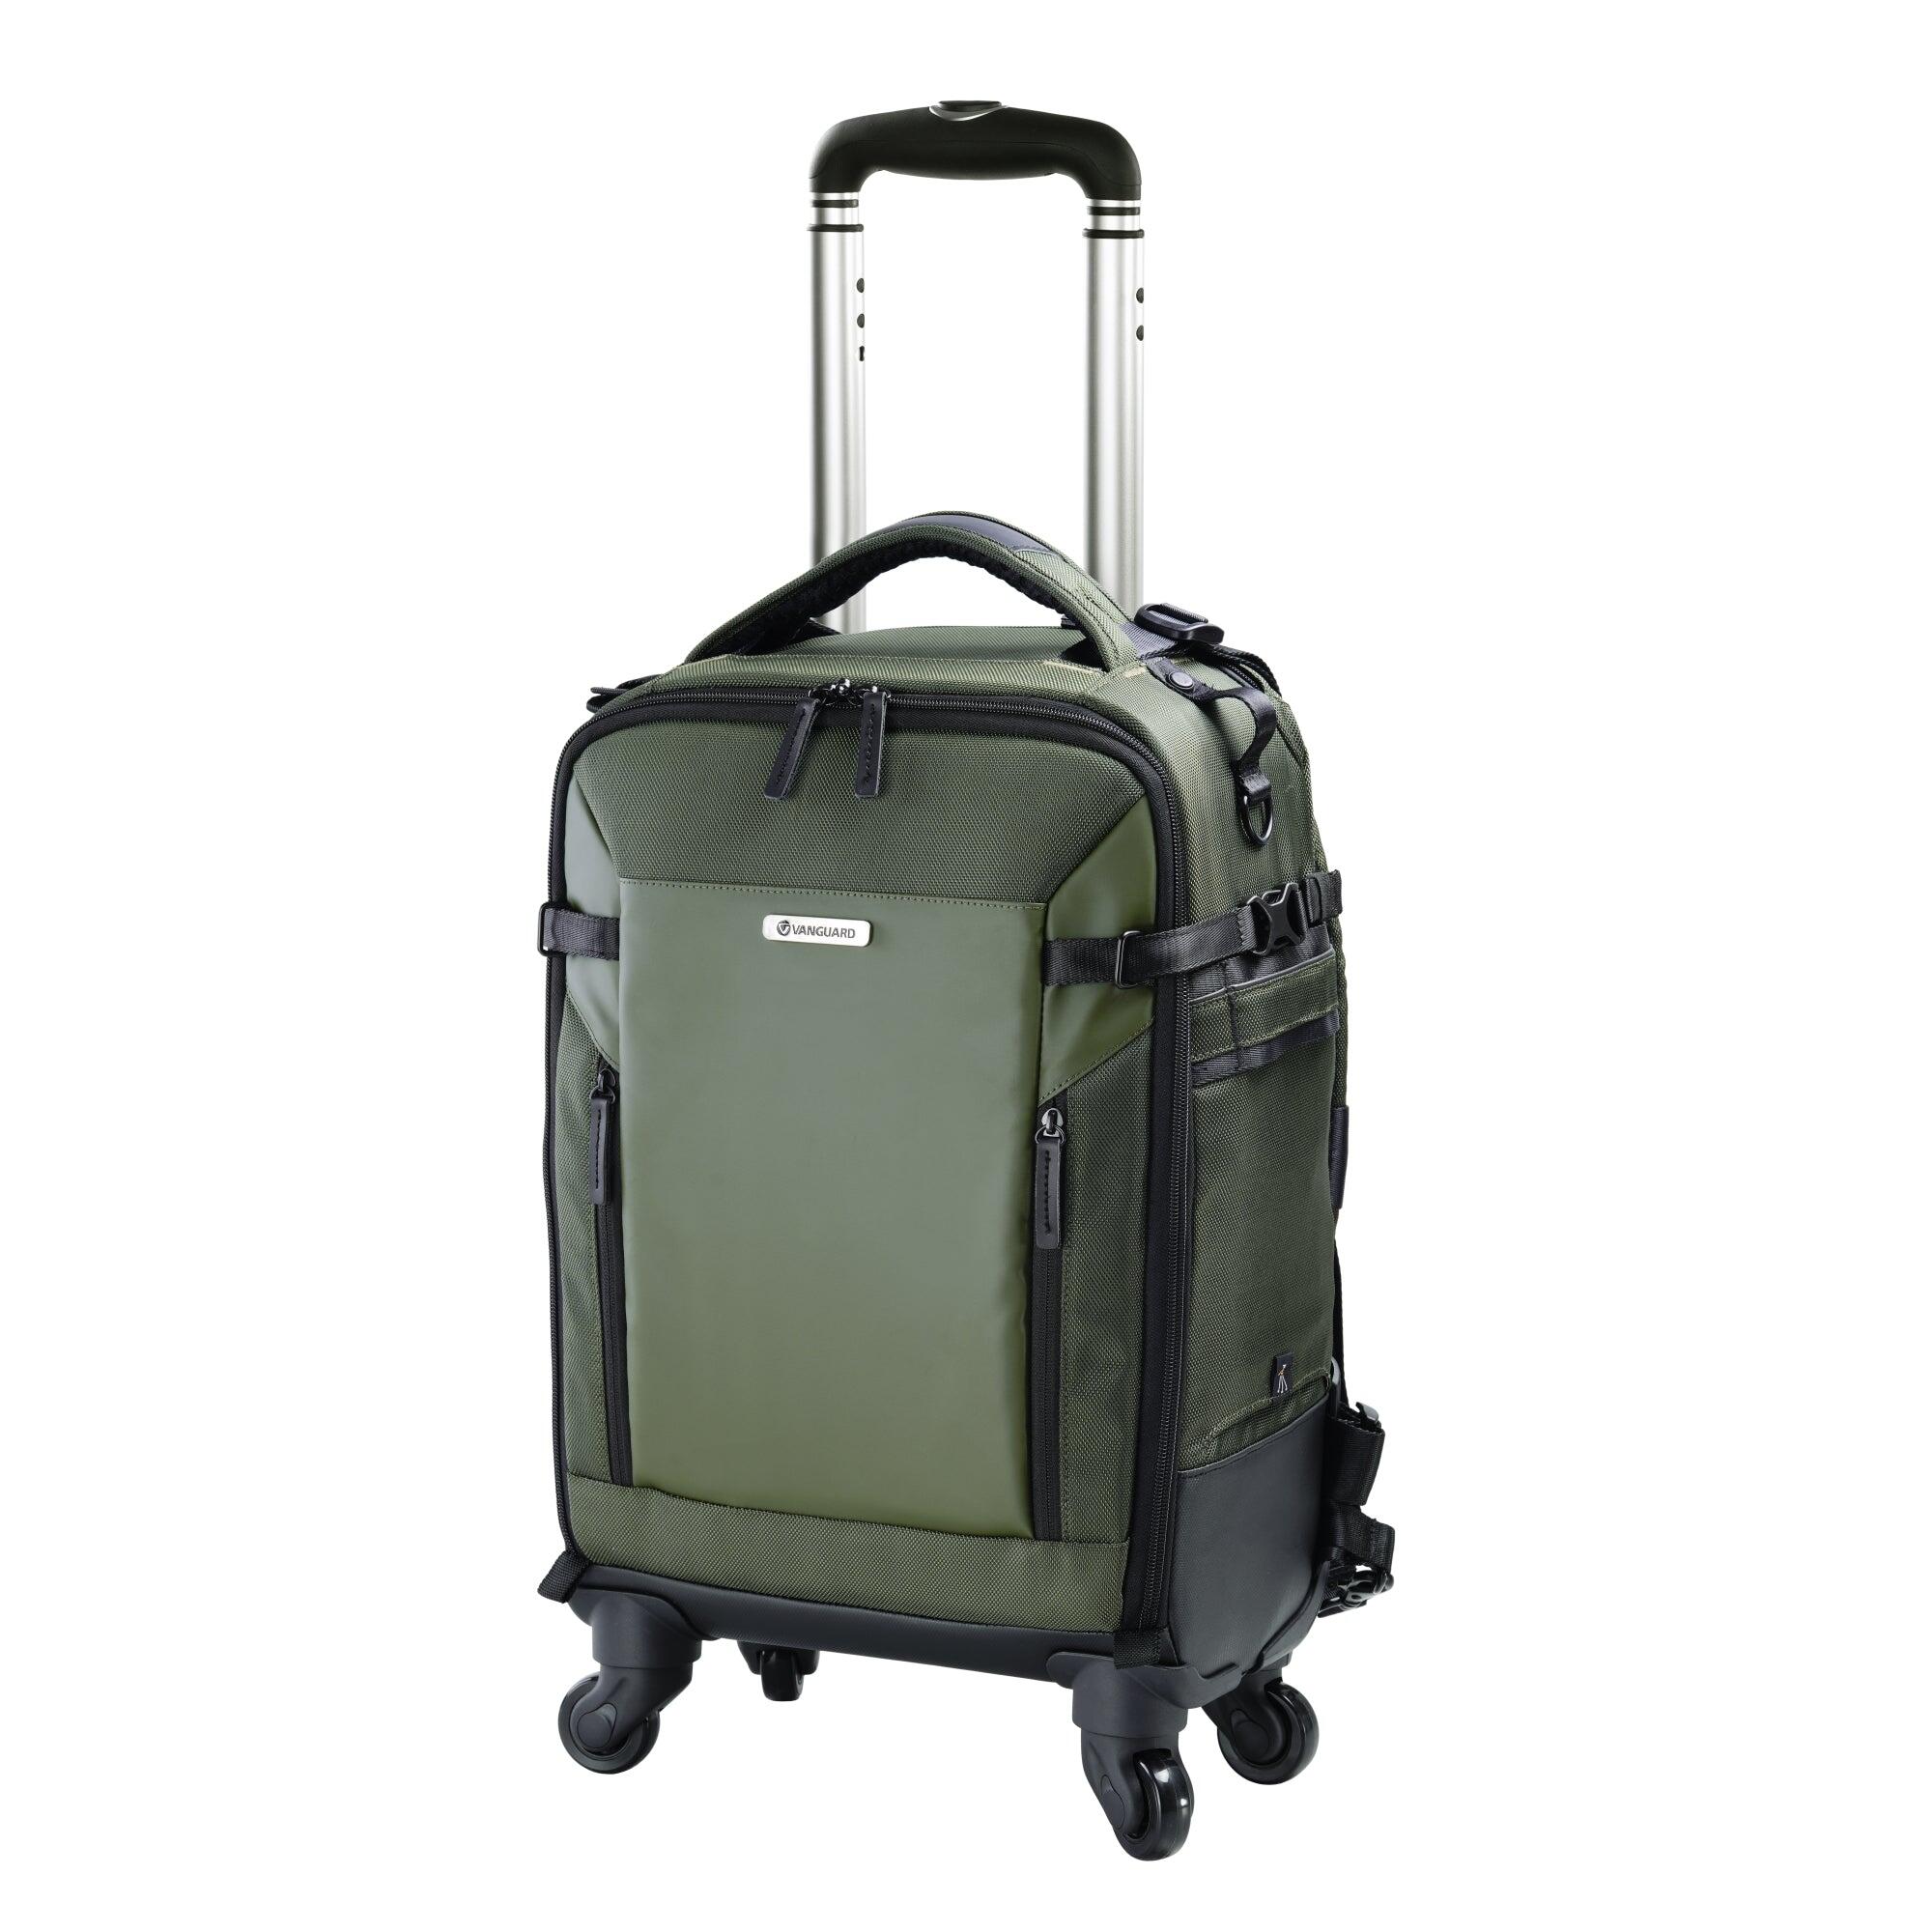 VEO Select 55BT GR - 4-wheel Camera Roller Case/Backpack - Green 5/5